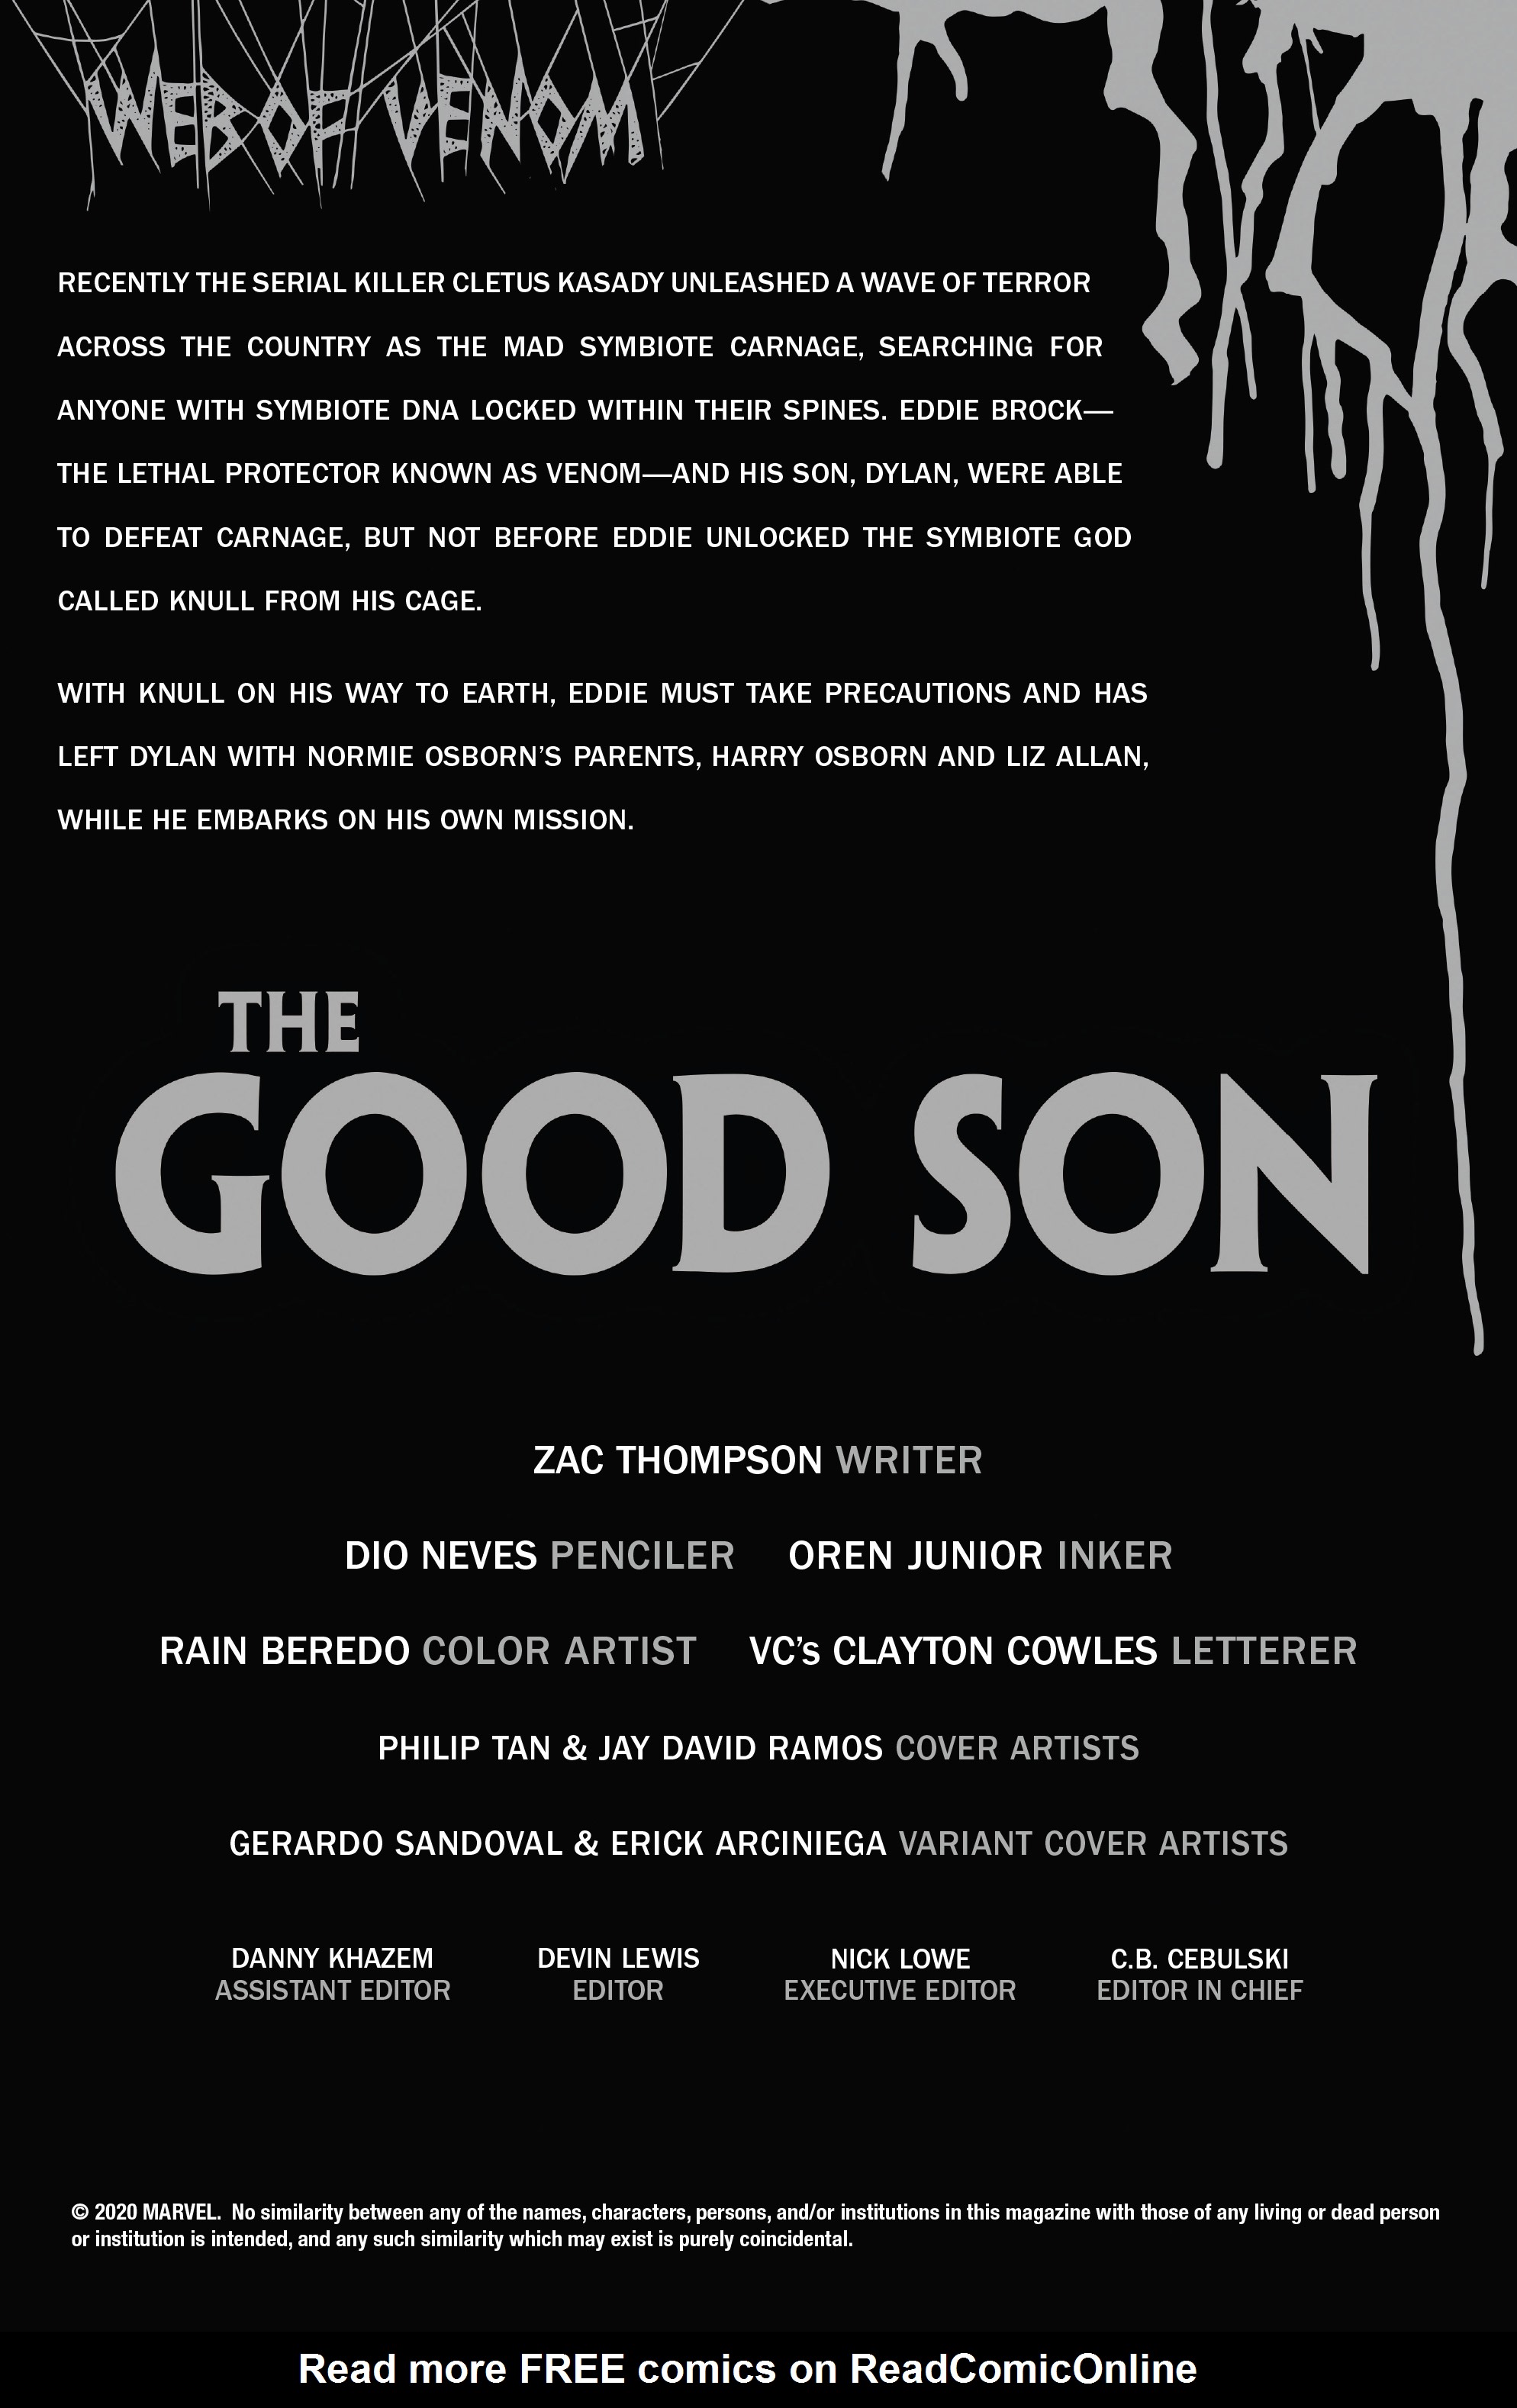 Read online Web Of Venom: The Good Son comic -  Issue # Full - 2